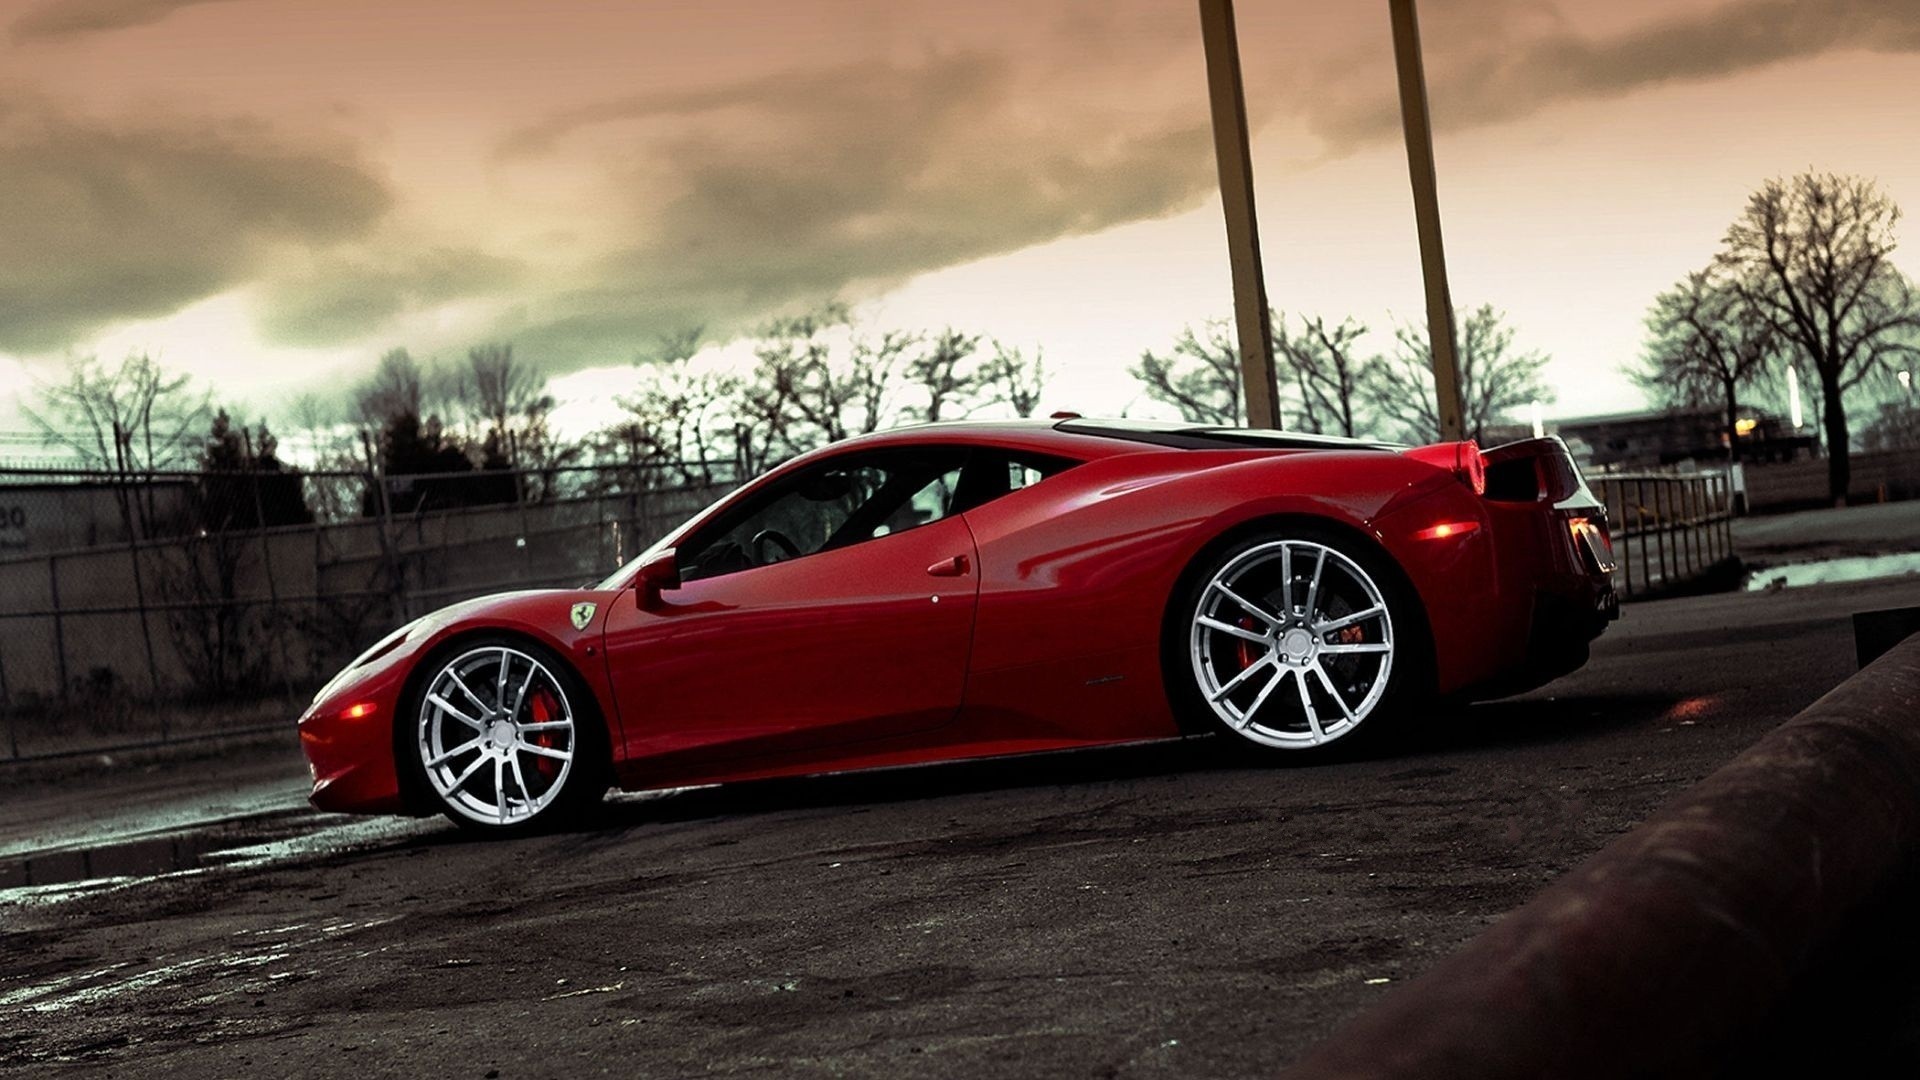 Free download wallpaper Ferrari 458 Italia, Vehicles on your PC desktop